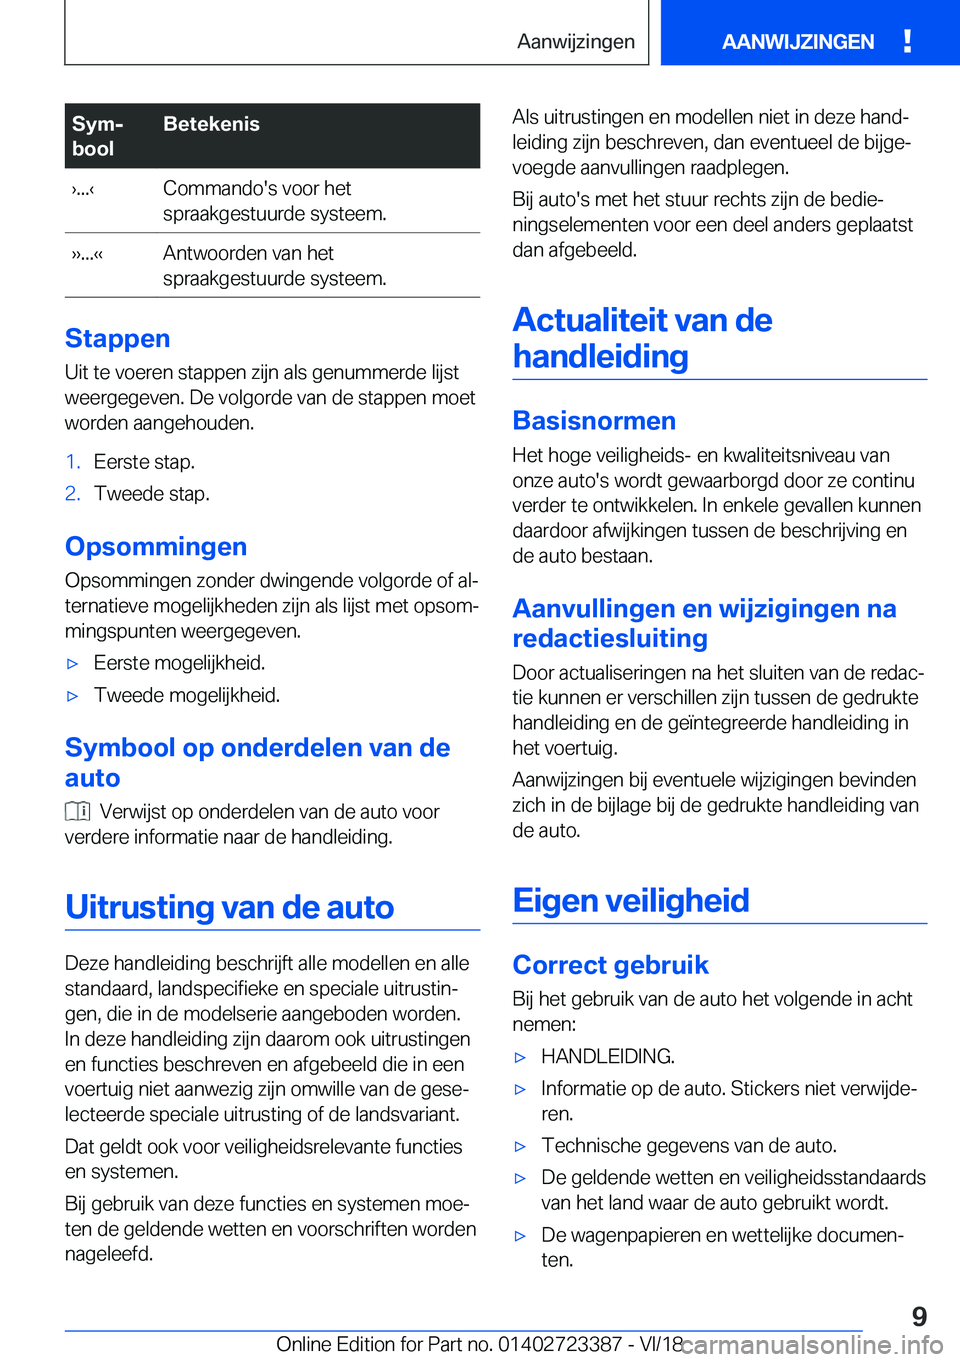 BMW 2 SERIES COUPE 2019  Instructieboekjes (in Dutch) �S�y�mj
�b�o�o�l�B�e�t�e�k�e�n�i�s